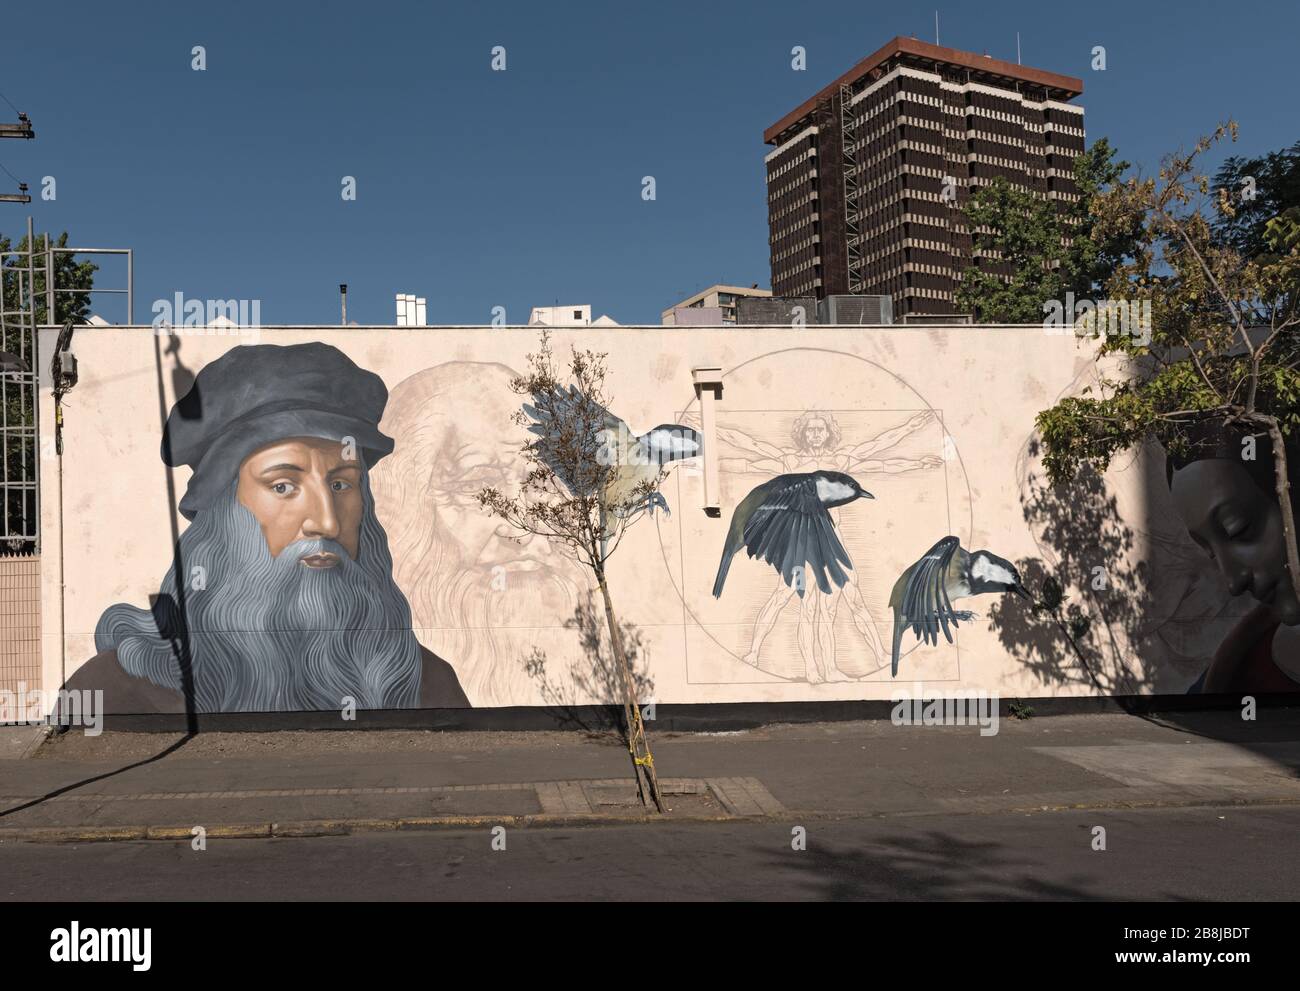 Street art mural, graffiti in the capital of Chile, Santiago Stock Photo